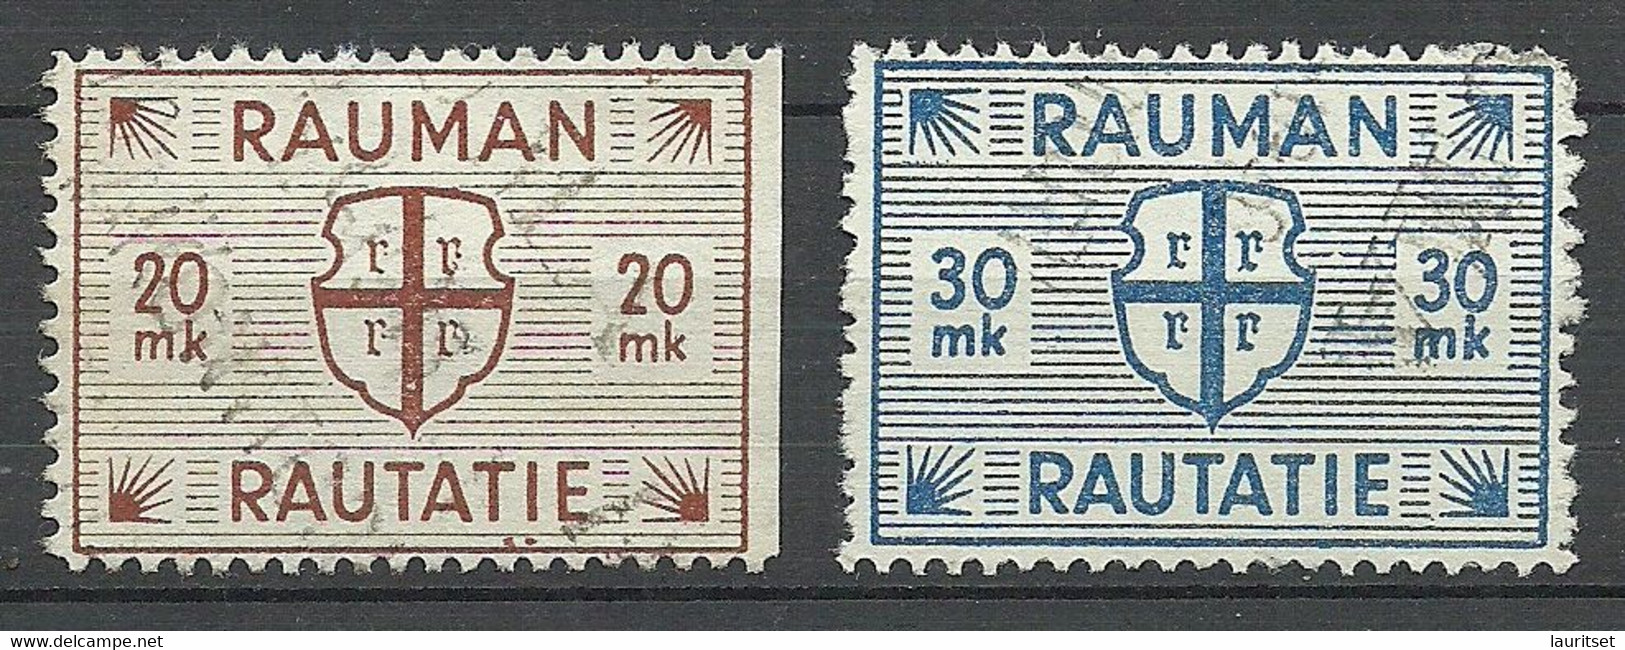 FINLAND FINNLAND 1945 RAUMA Railway Stamps 20 & 30 MK O - Postpaketten